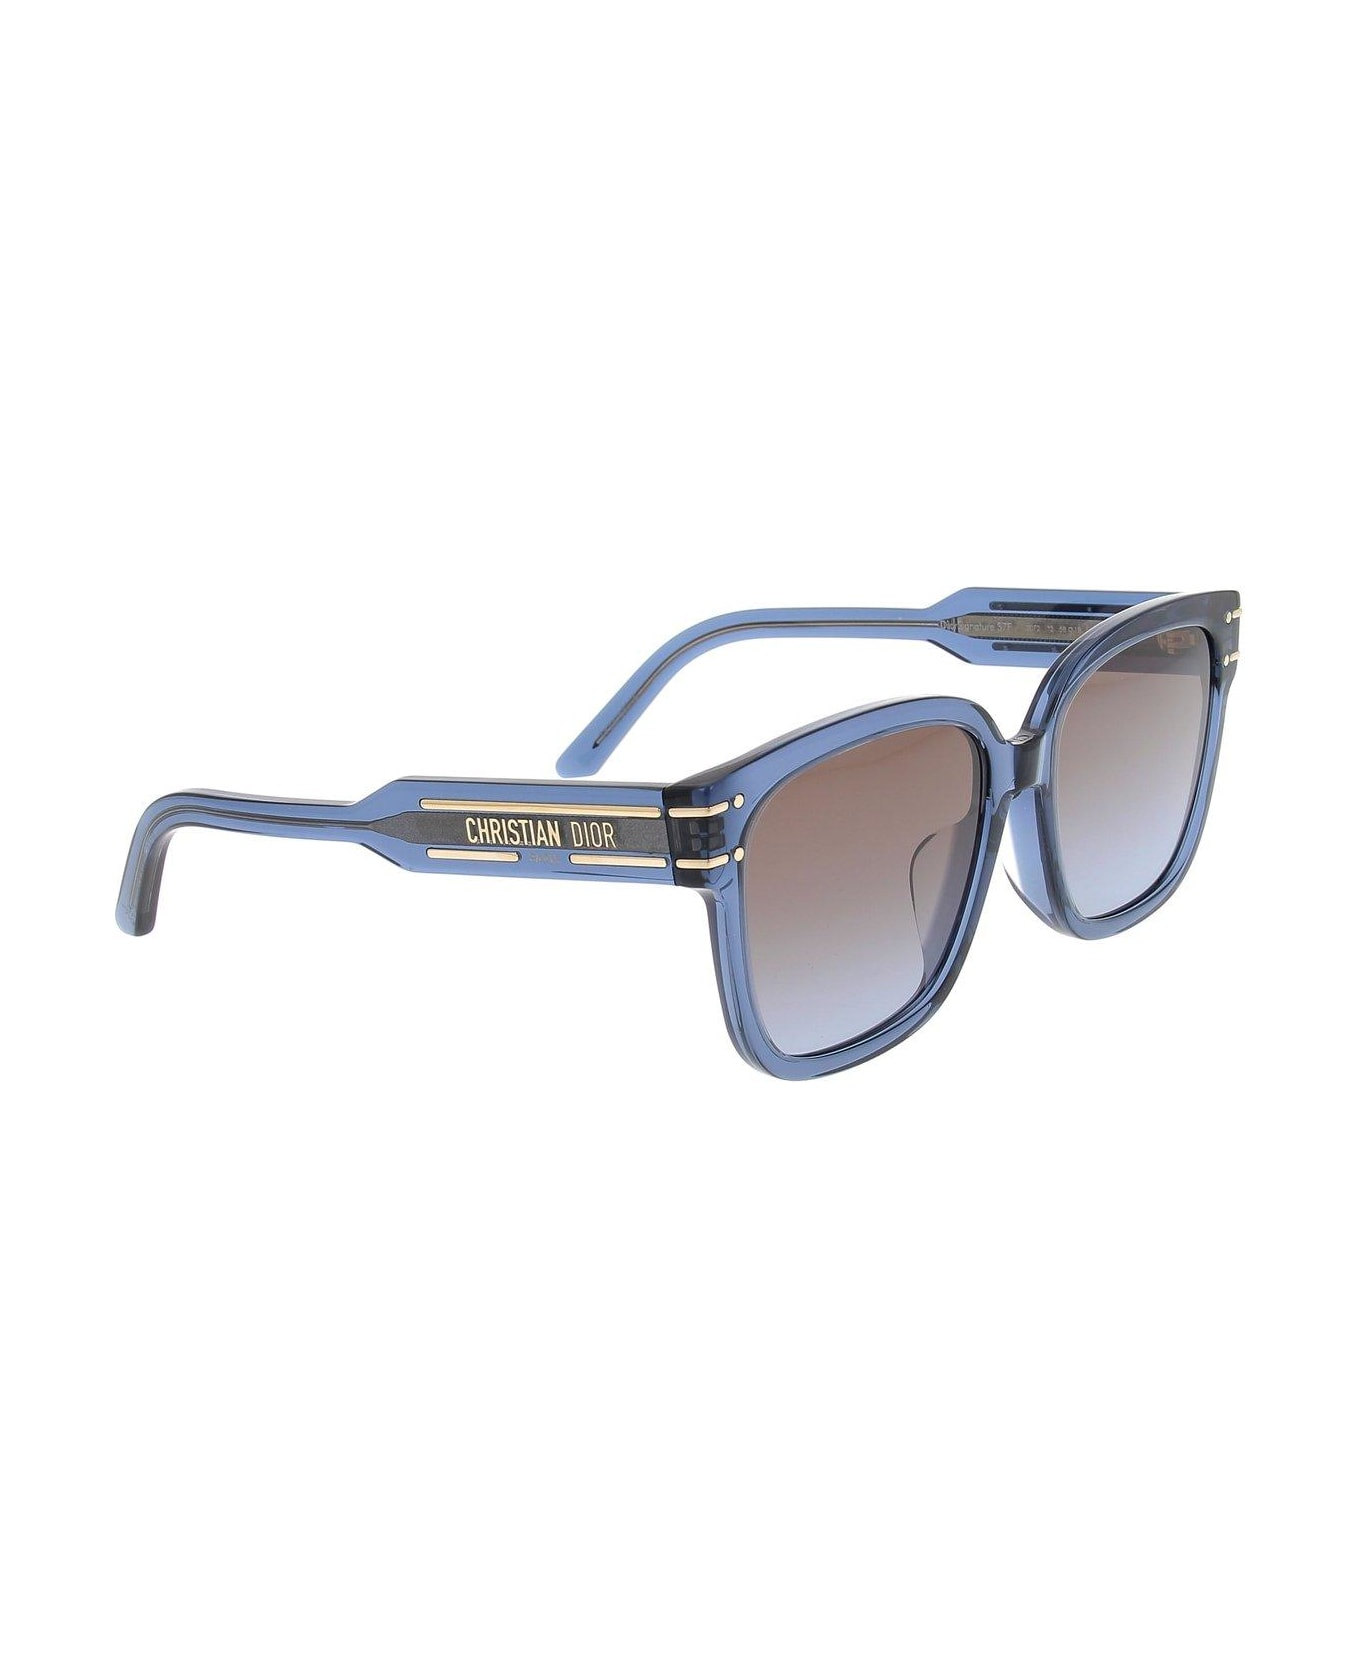 Dior Eyewear Square Framed Sunglasses - 30f2